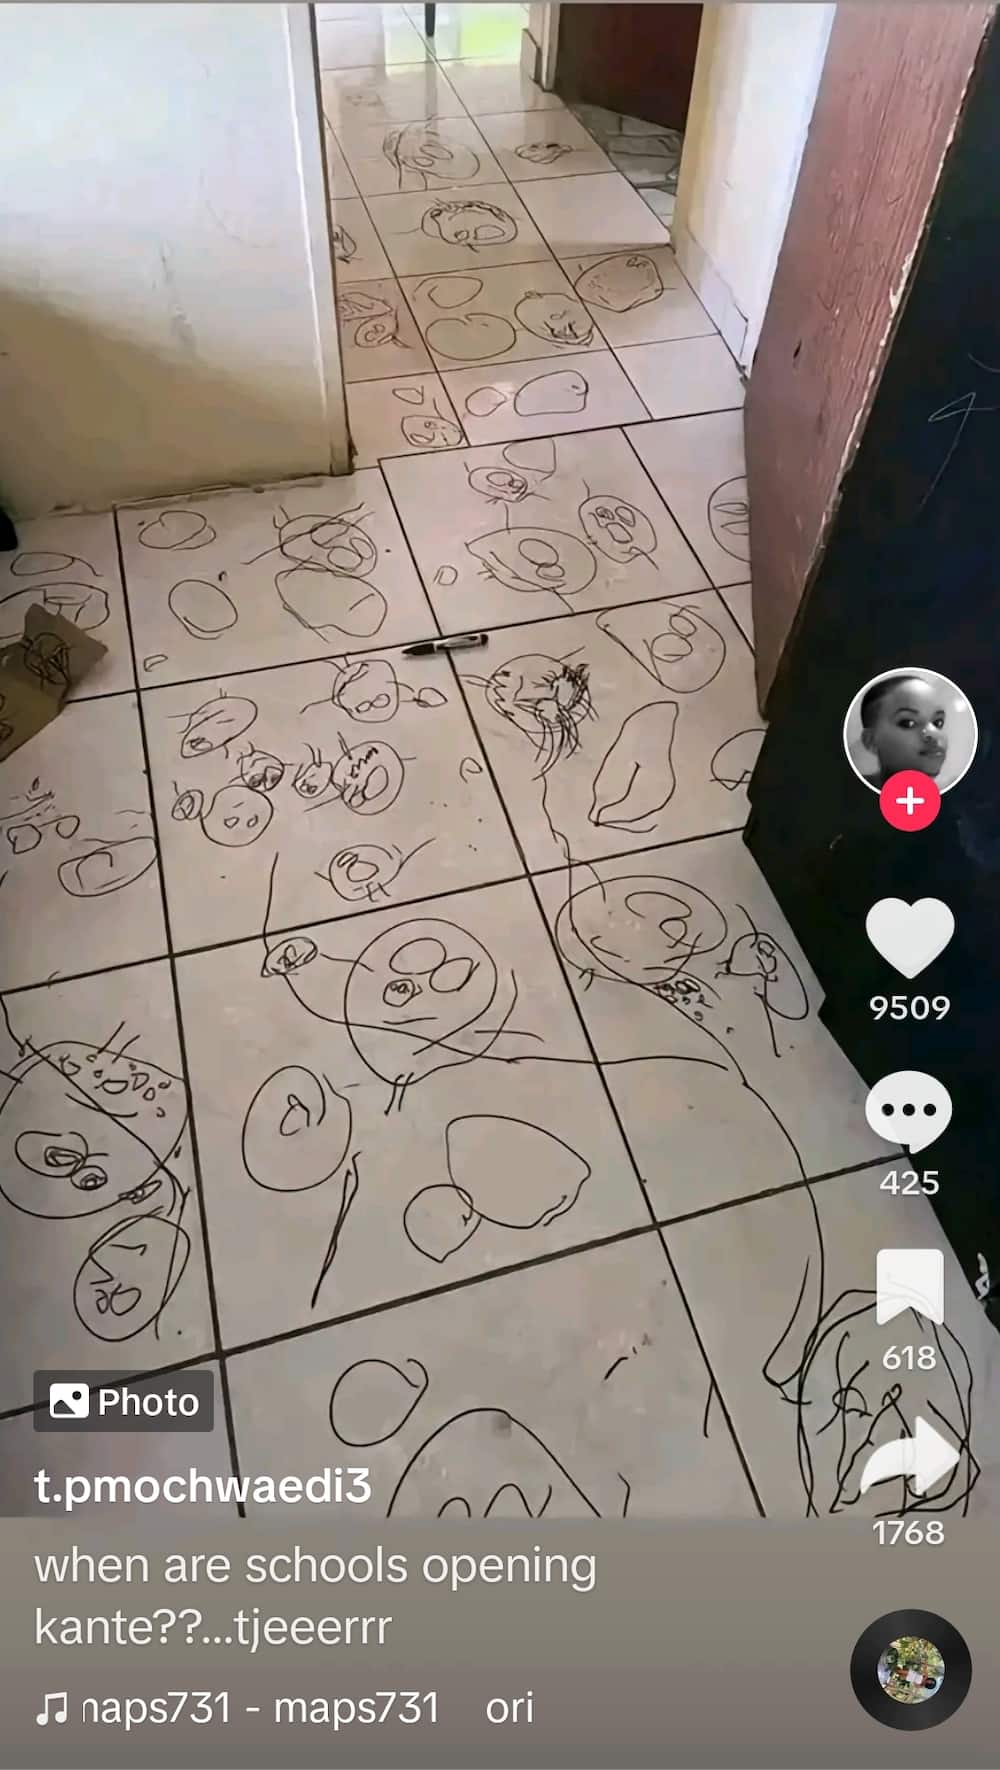 A child drew on the floor.